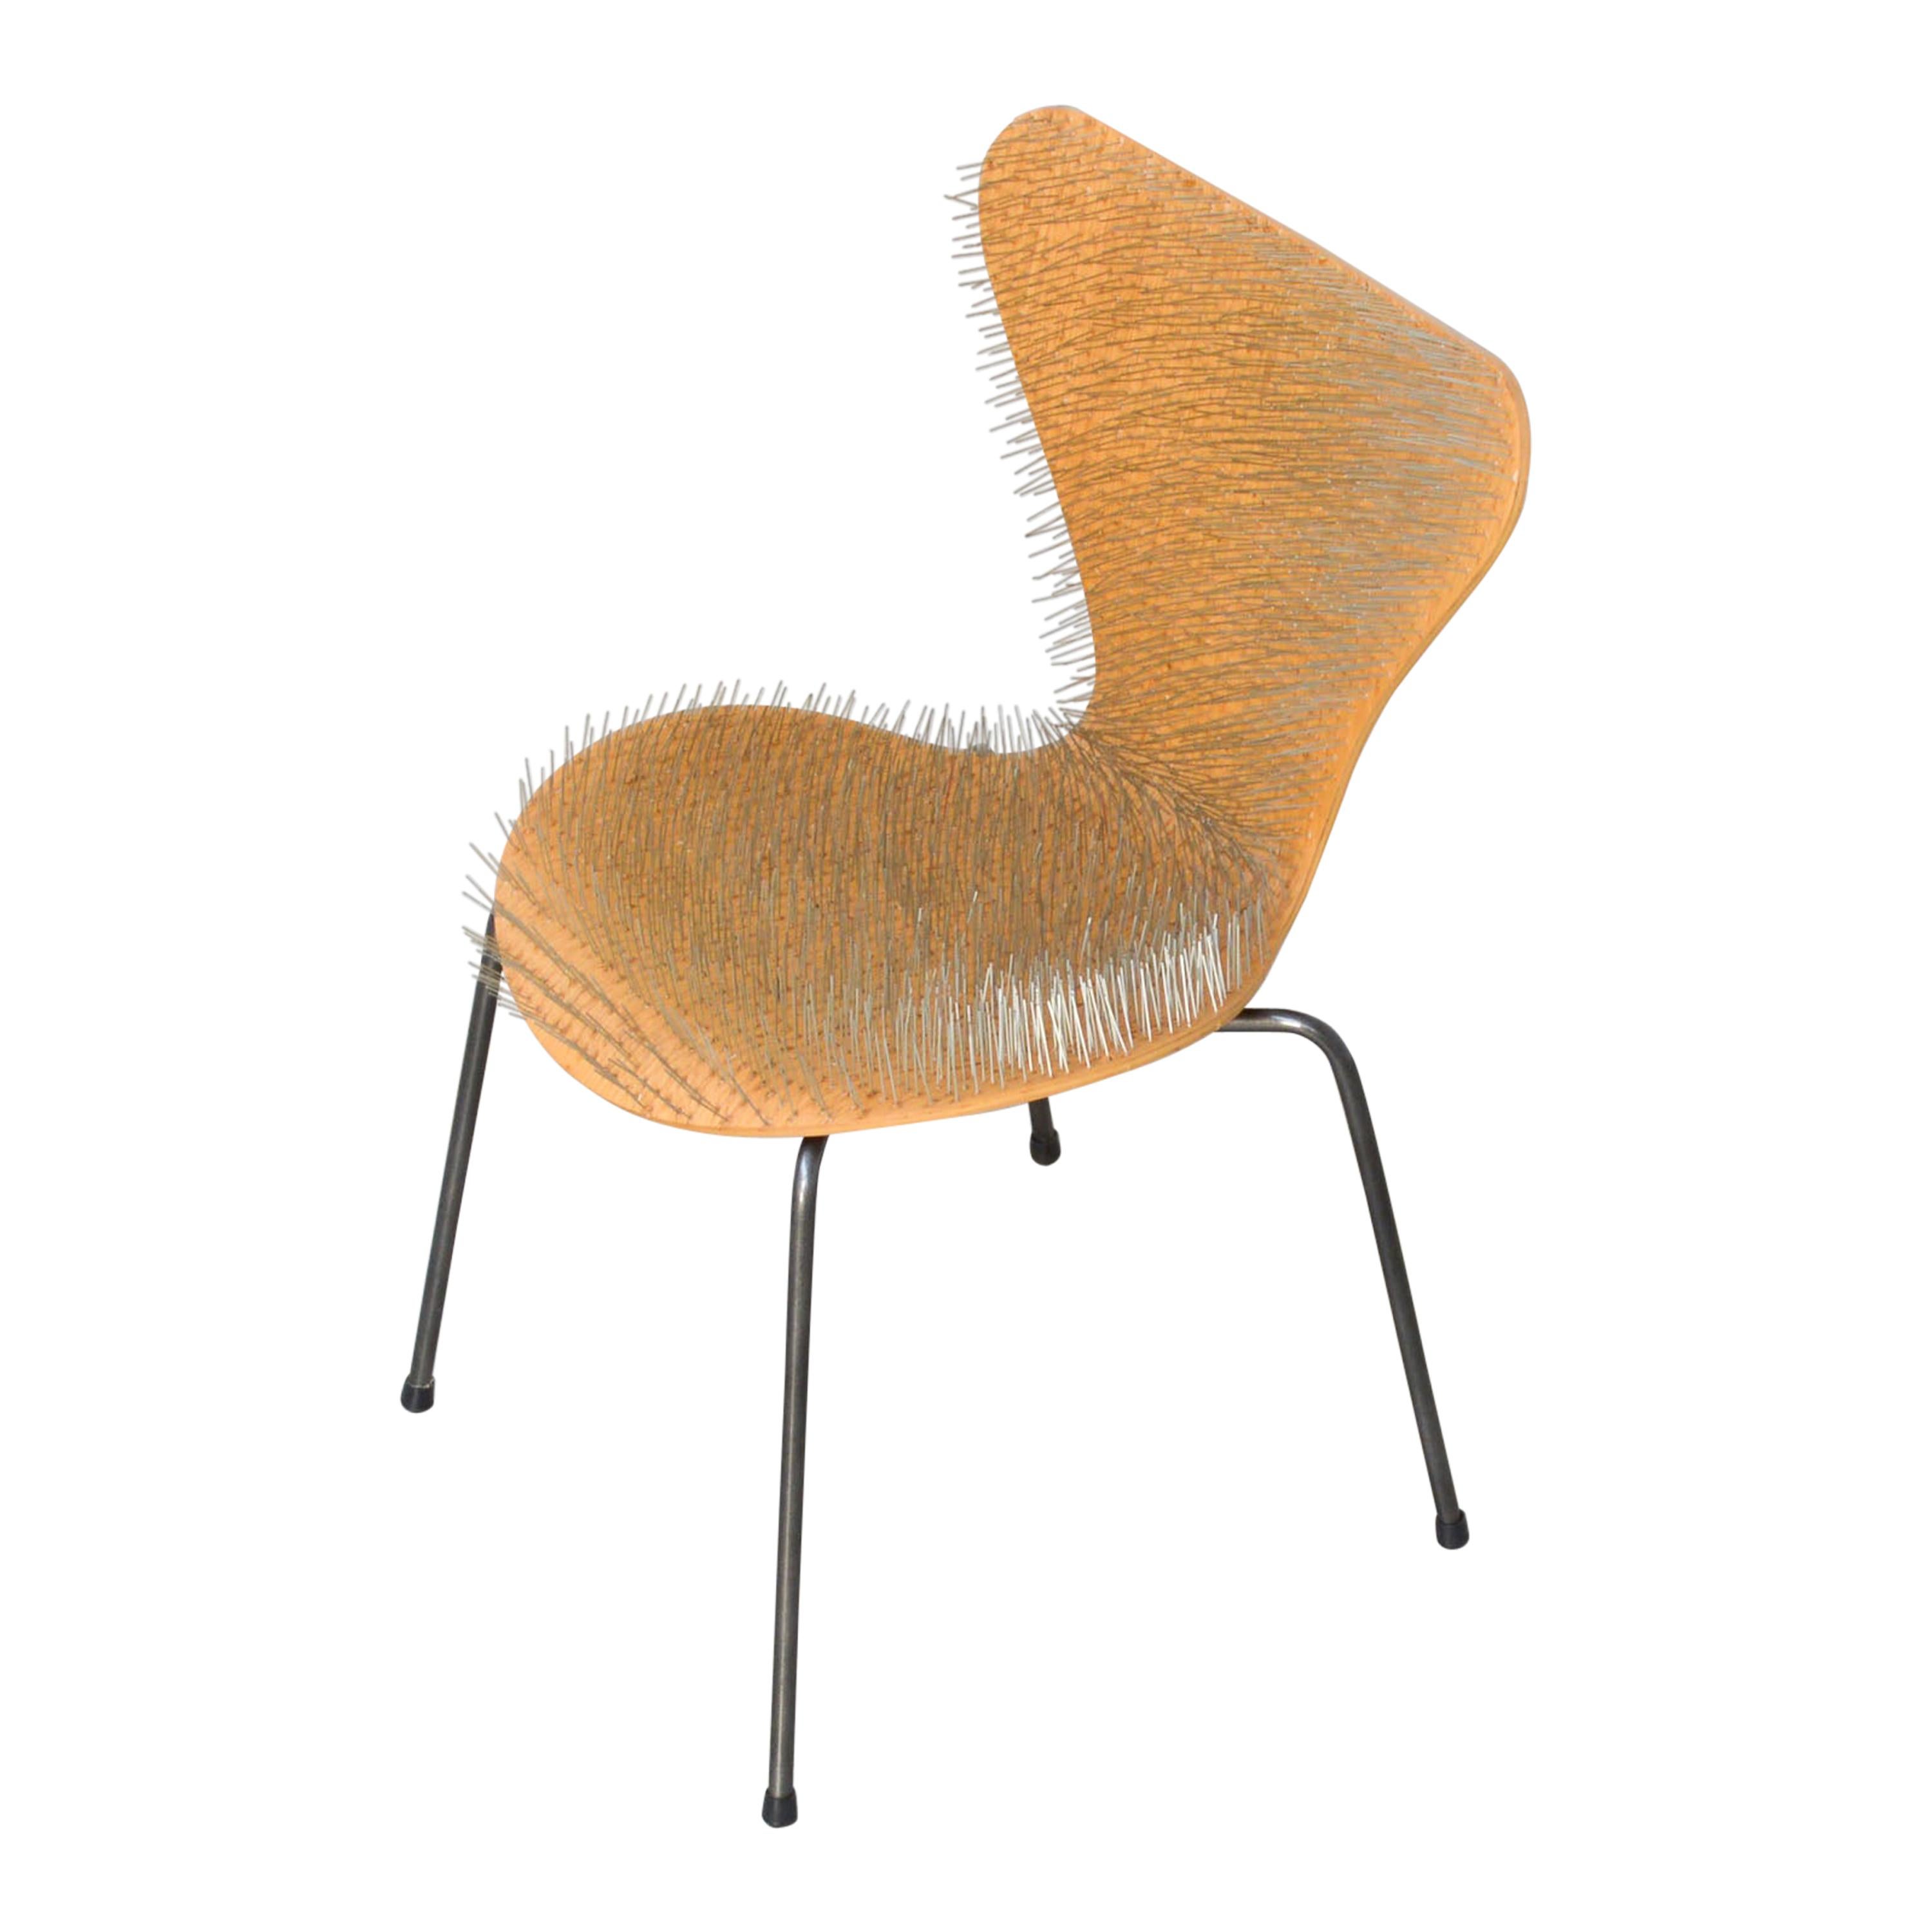 Vlinder .01, AJ Series 7 Chair, by Lennart Van Uffelen